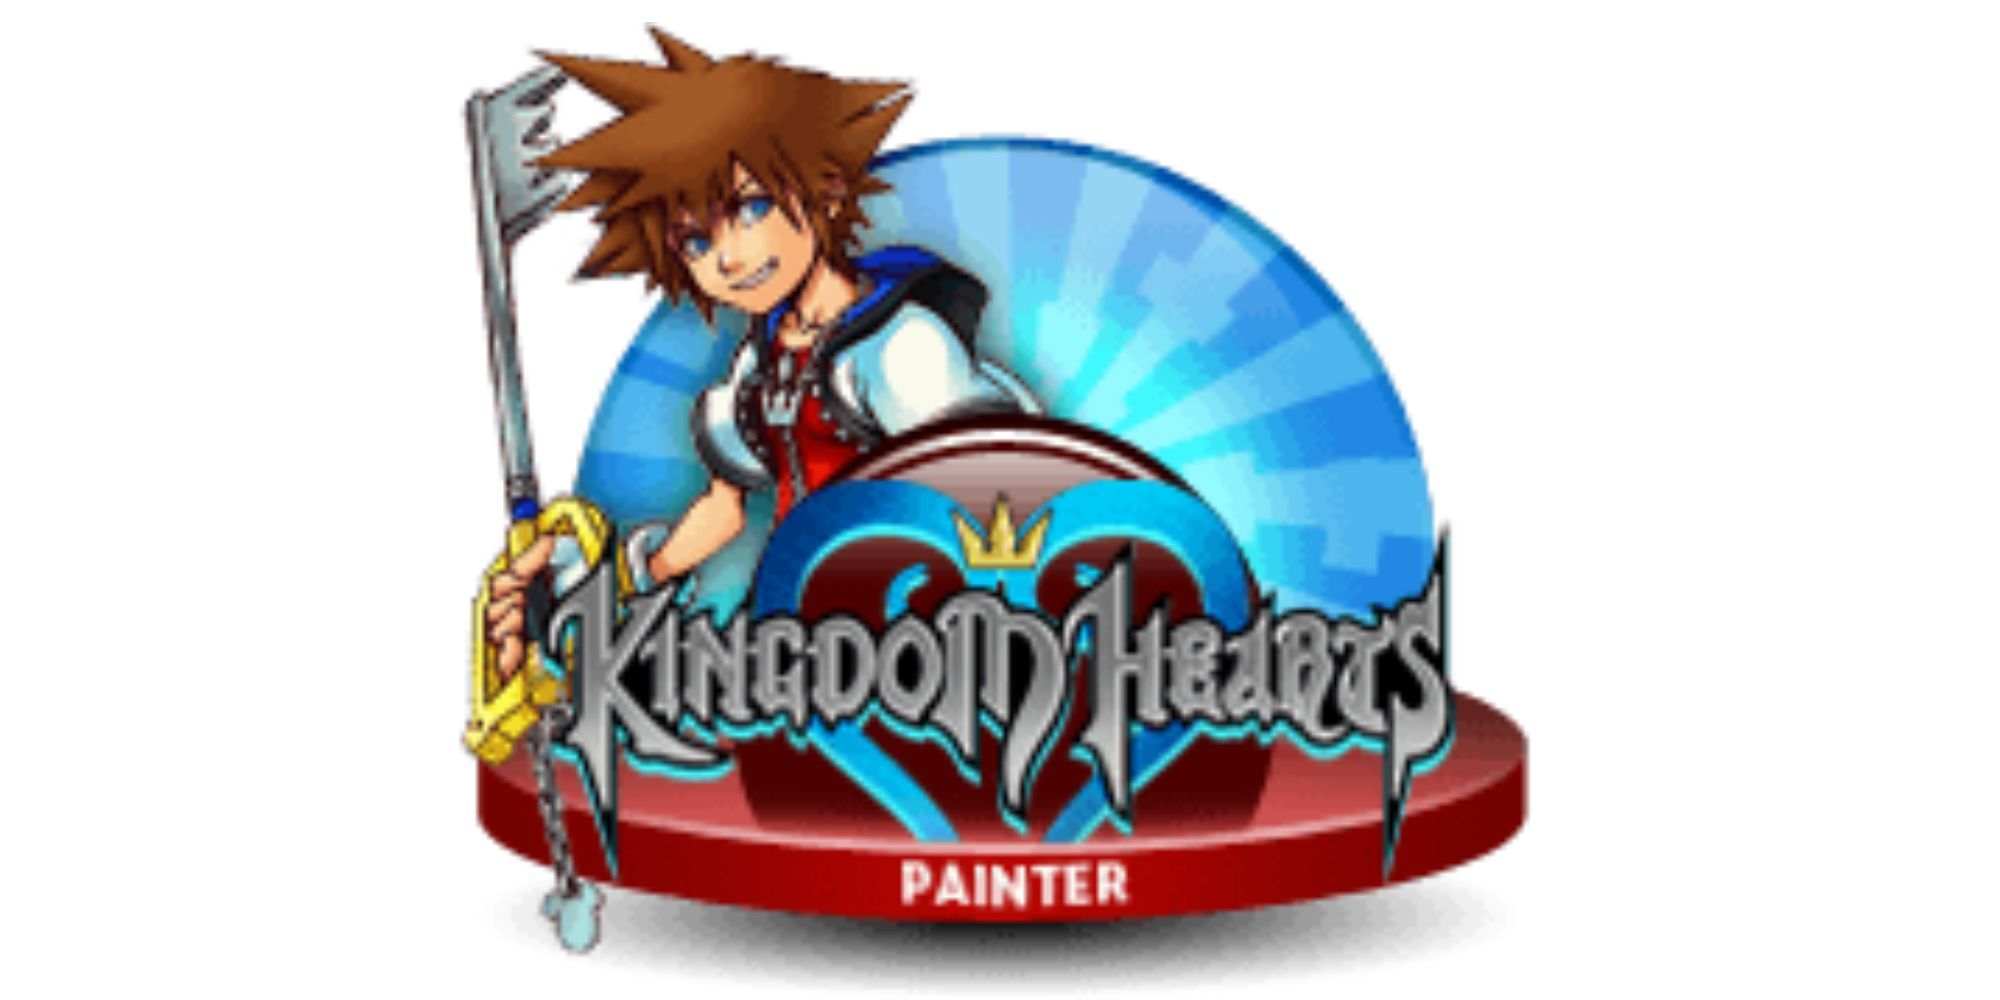 Official logo of Kingdom Hearts Digital Painter.